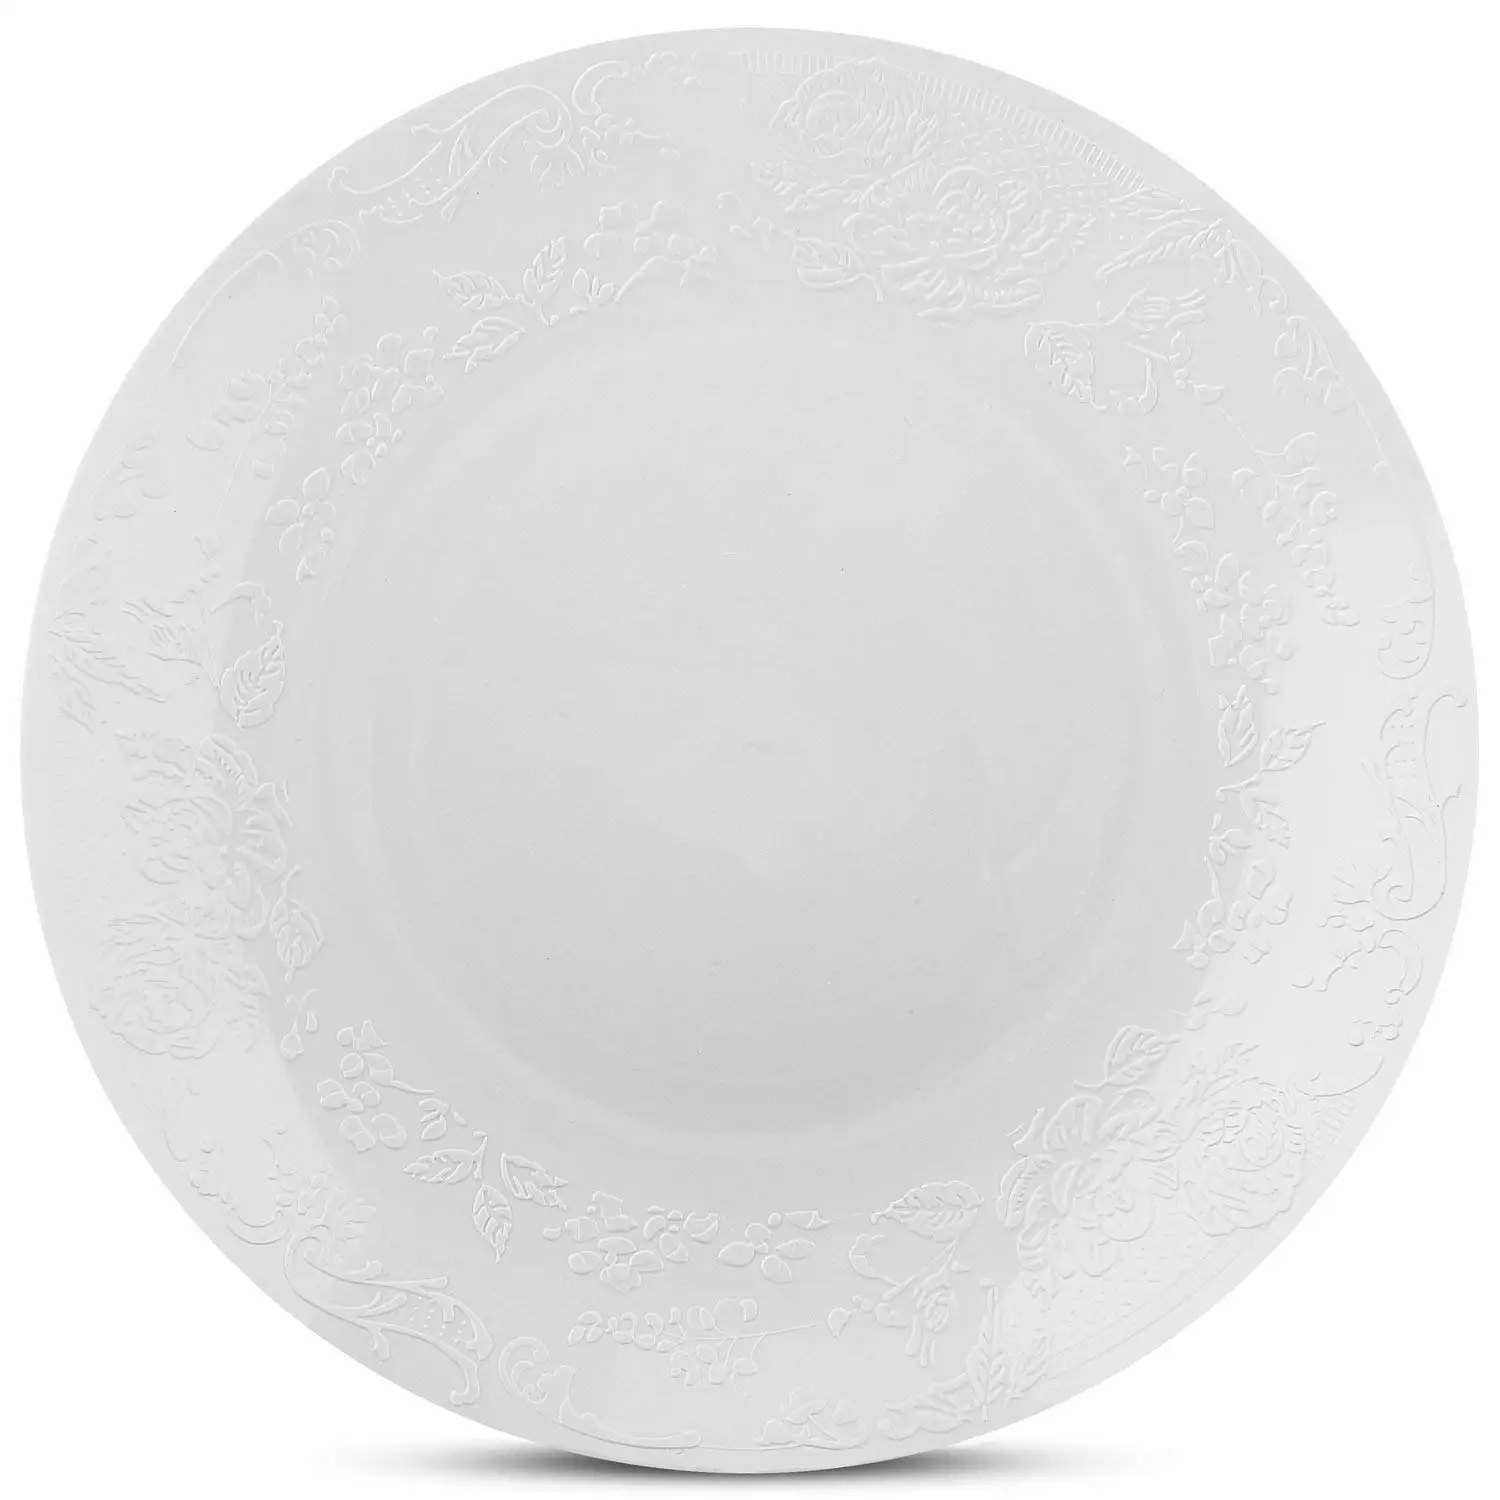 Cheap White Plastic Plates Wedding Find White Plastic Plates